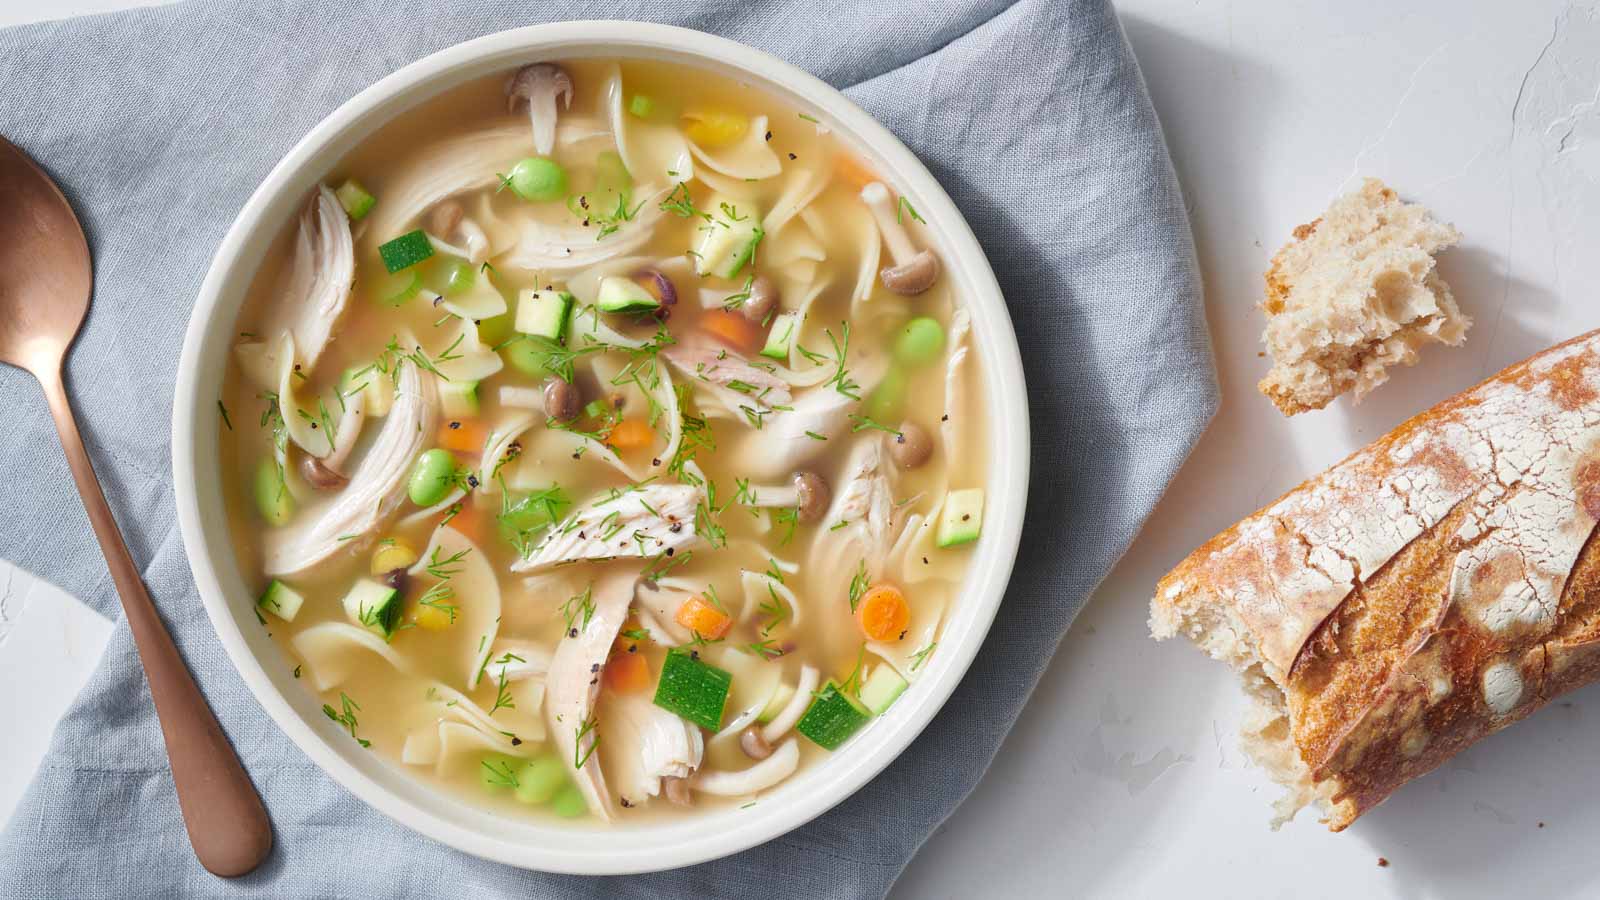 https://www.pccmarkets.com/wp-content/uploads/2021/01/pcc-leftover-deli-roast-chicken-soup-flo.jpg